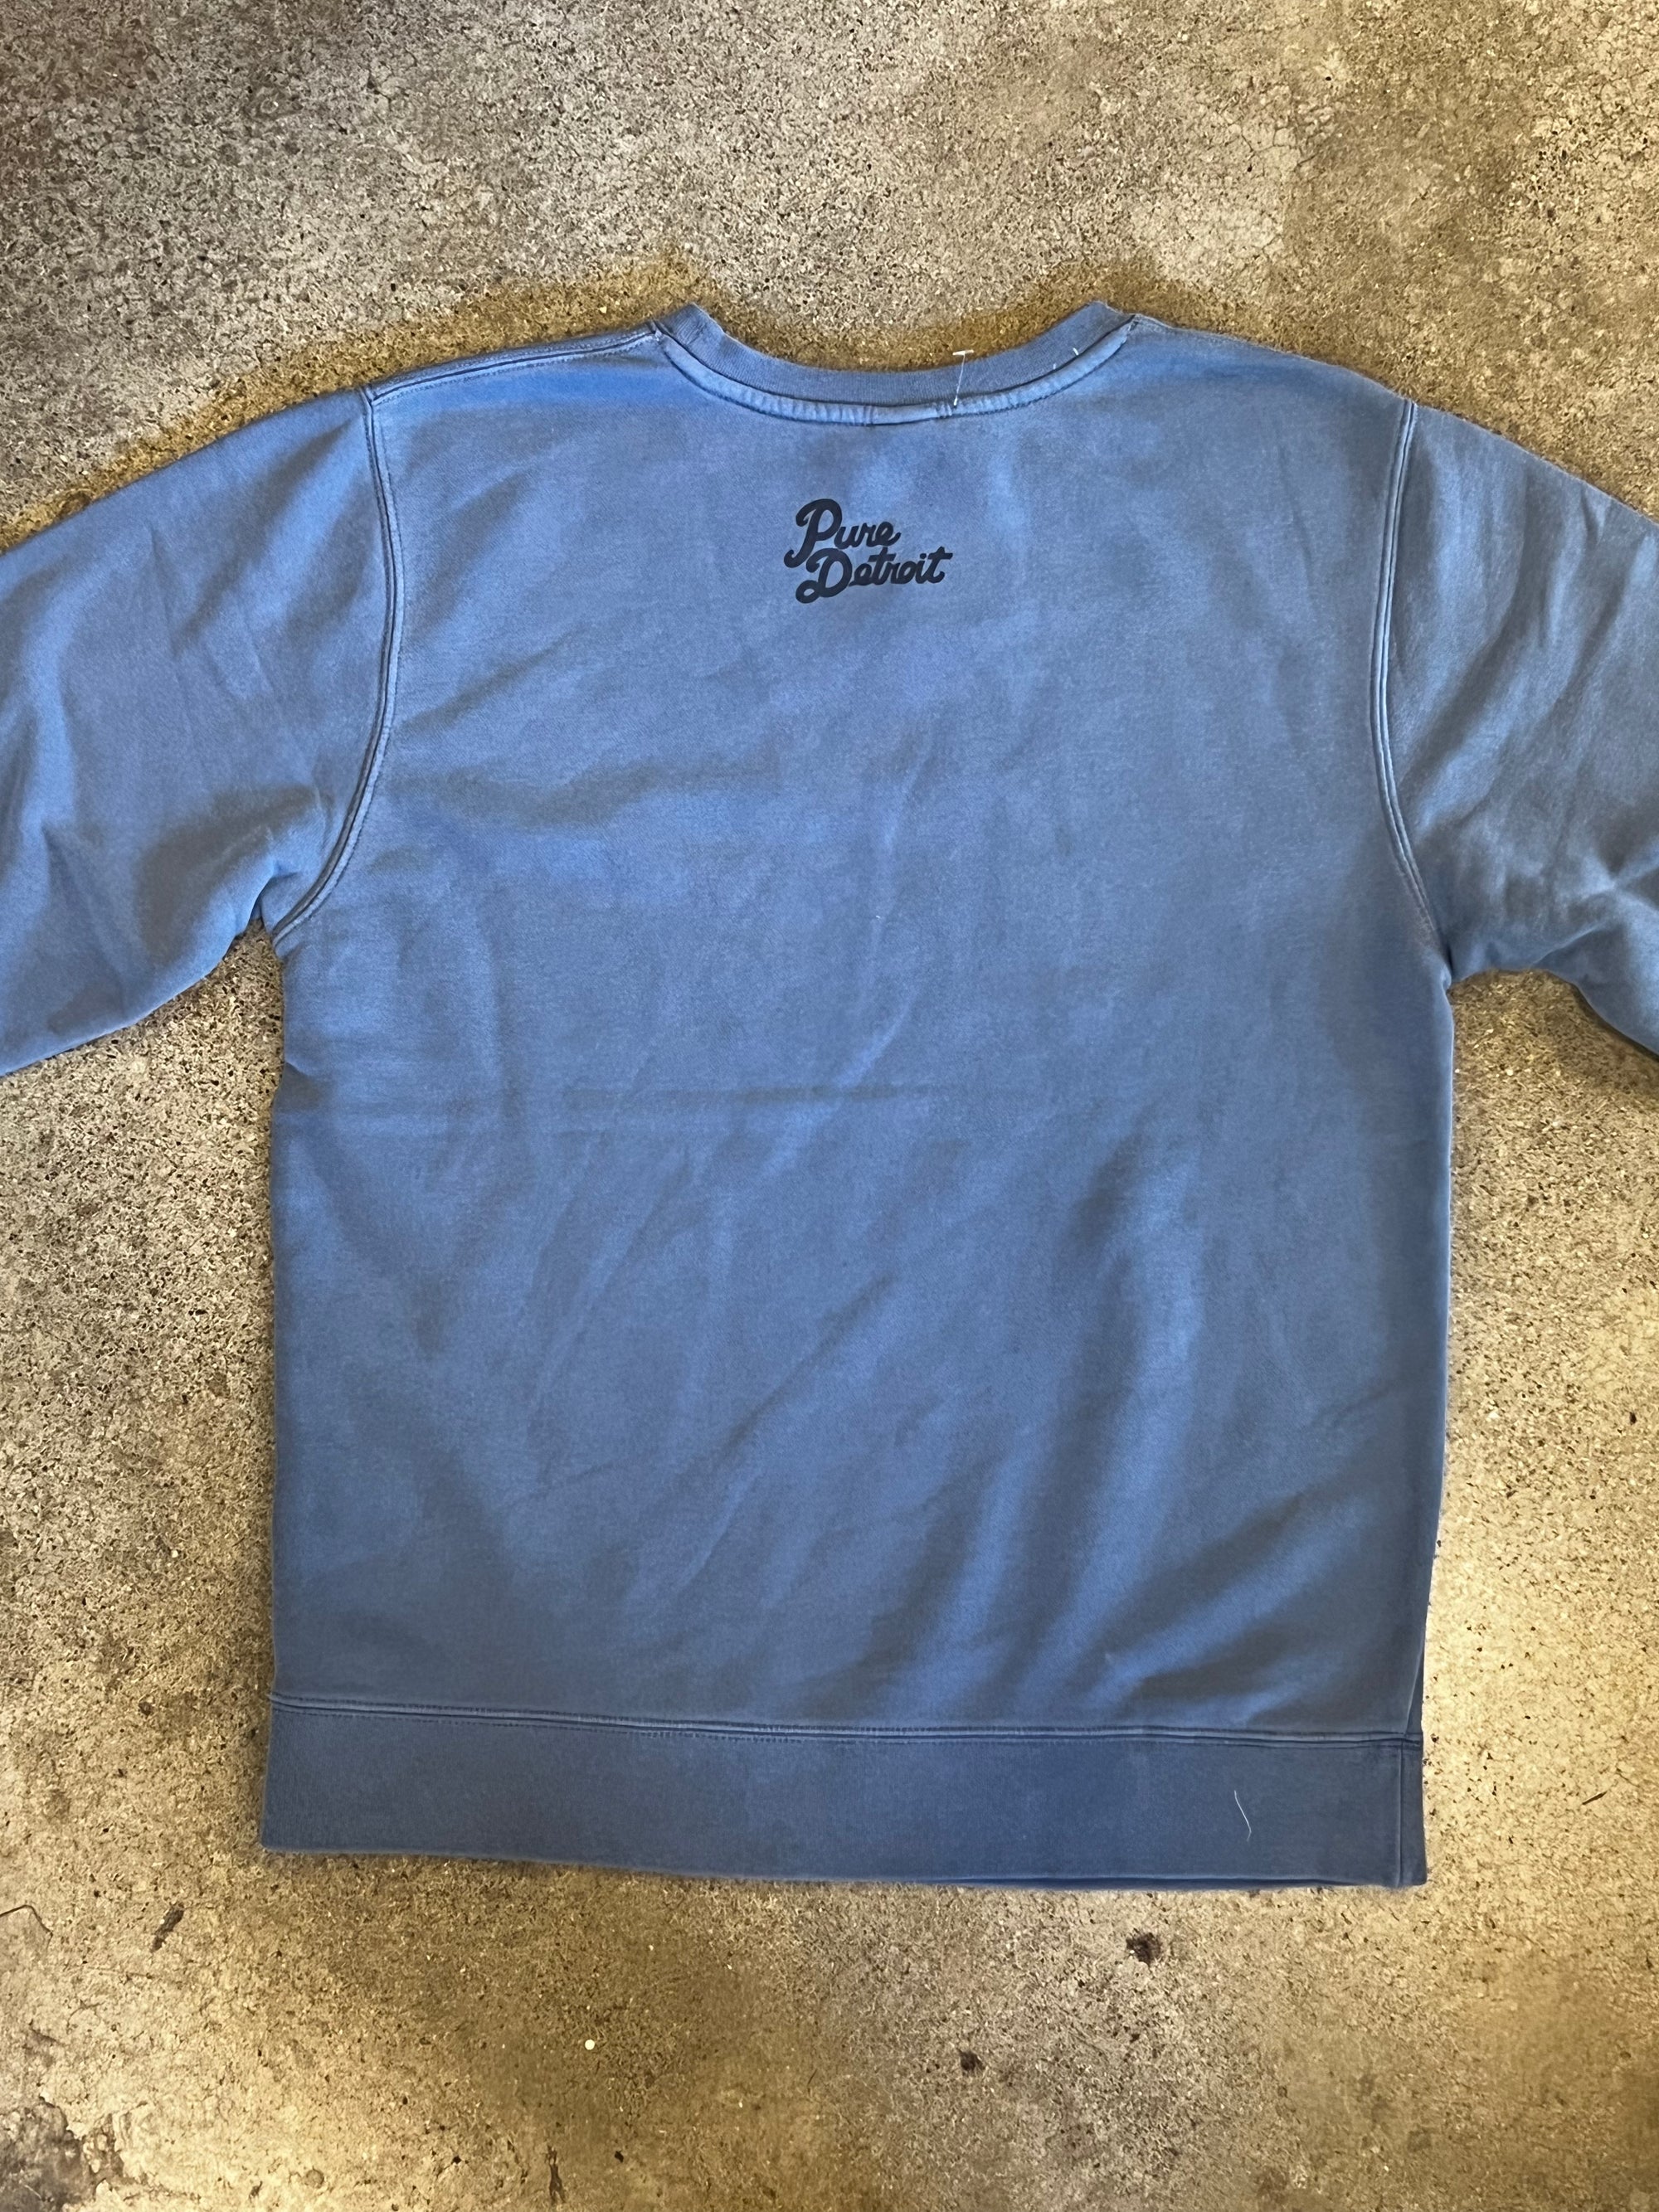 Detroiter Crew Neck - Embroidered /  White + Slate / Unisex sweatshirt   